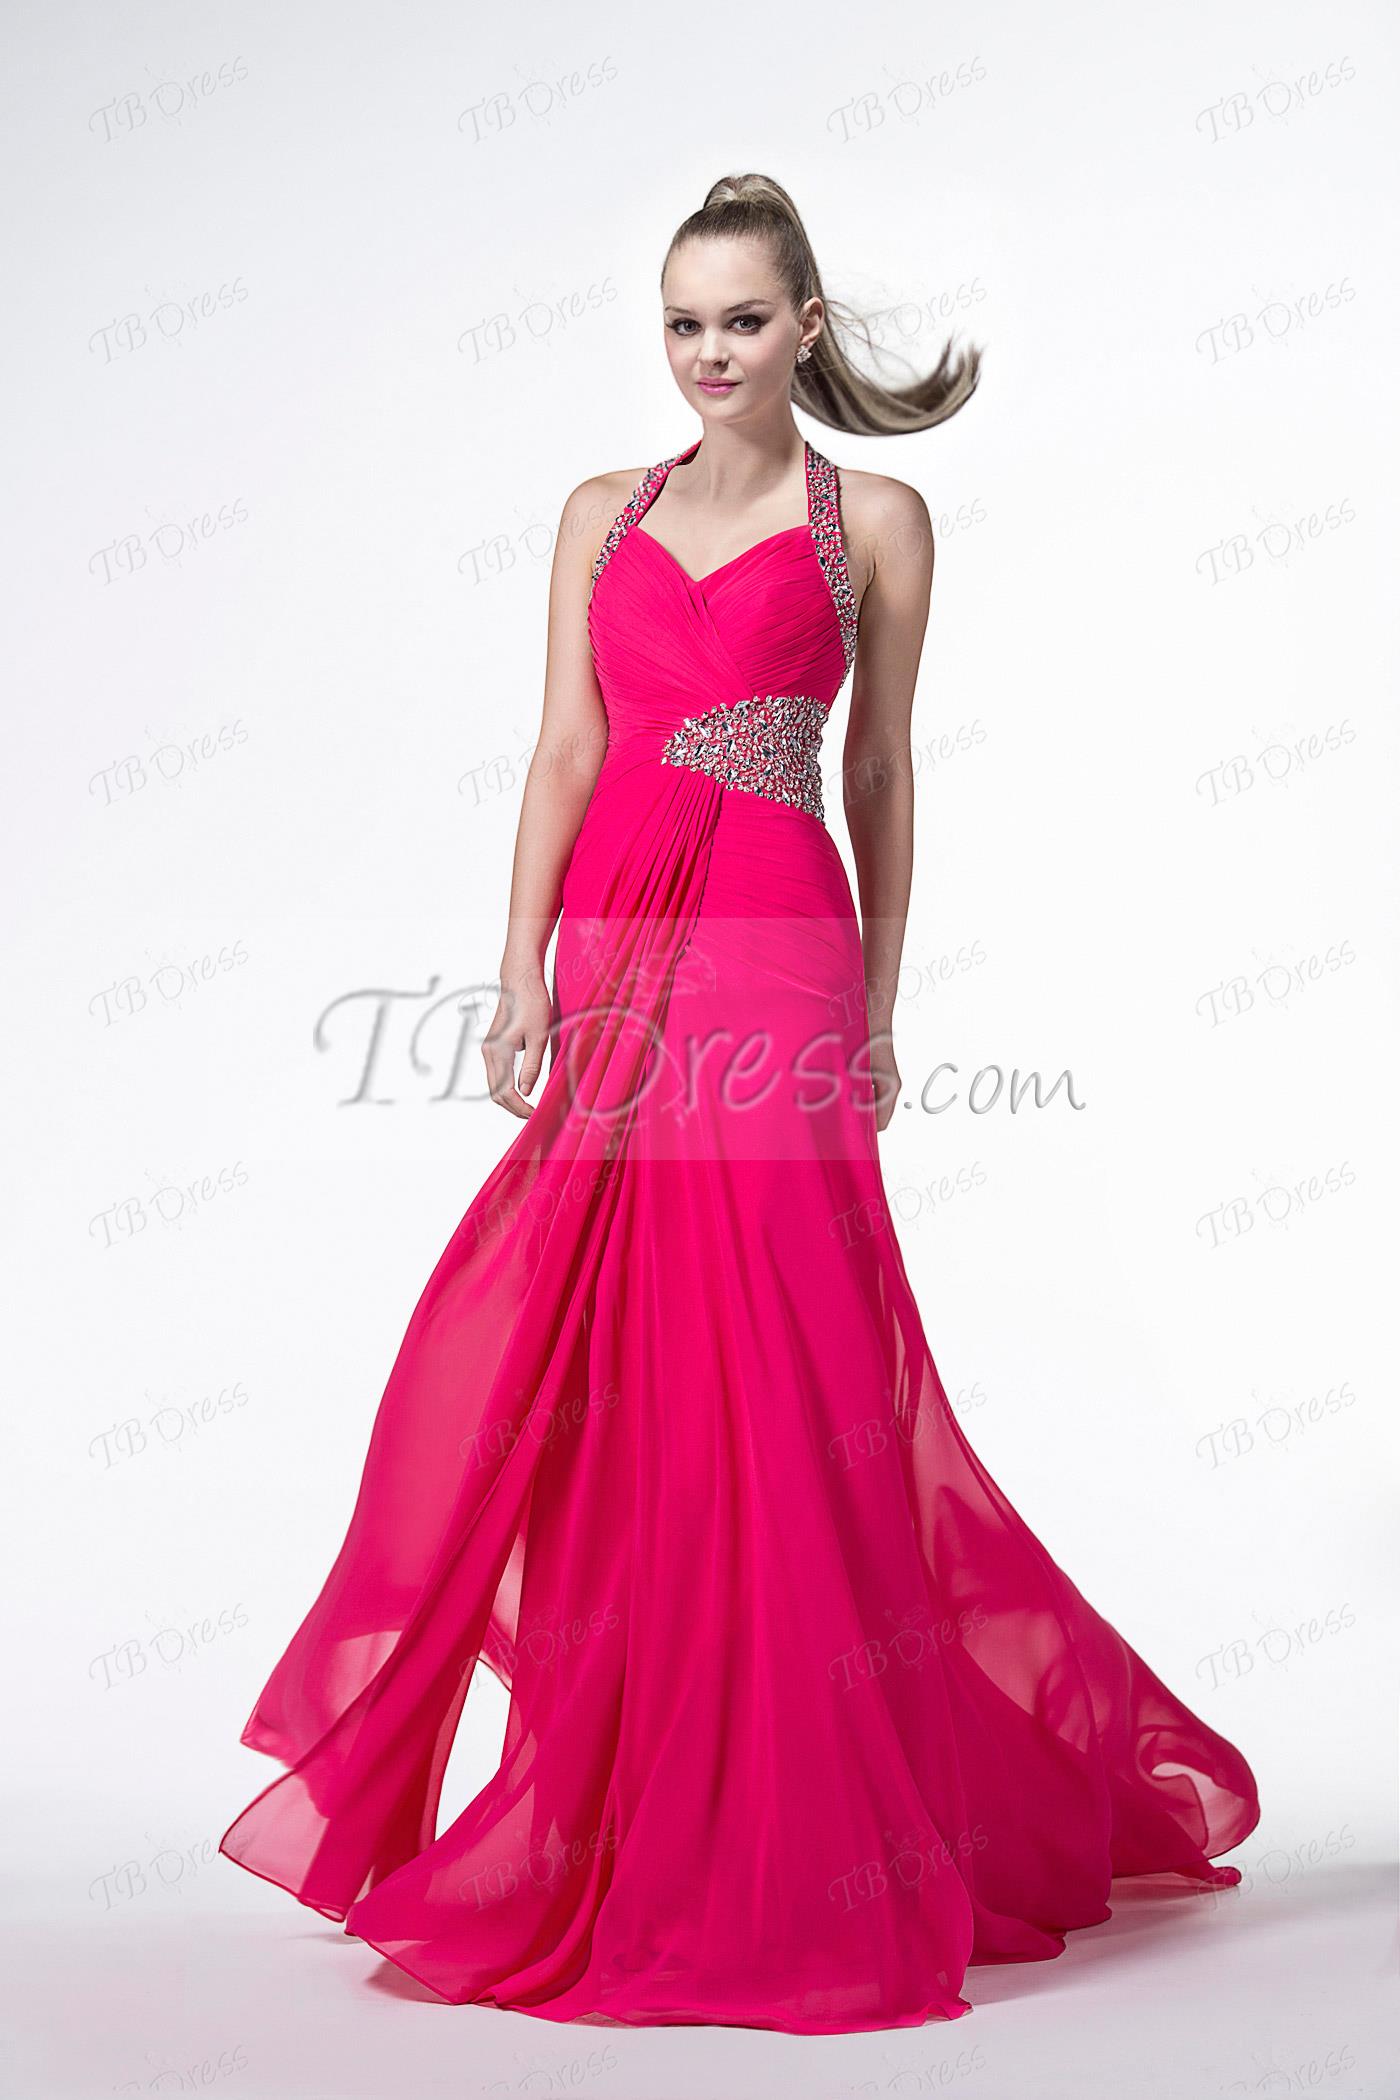 Pretty Halt Beading A-Line Floor Length Prom Dress Item Code: 10793118